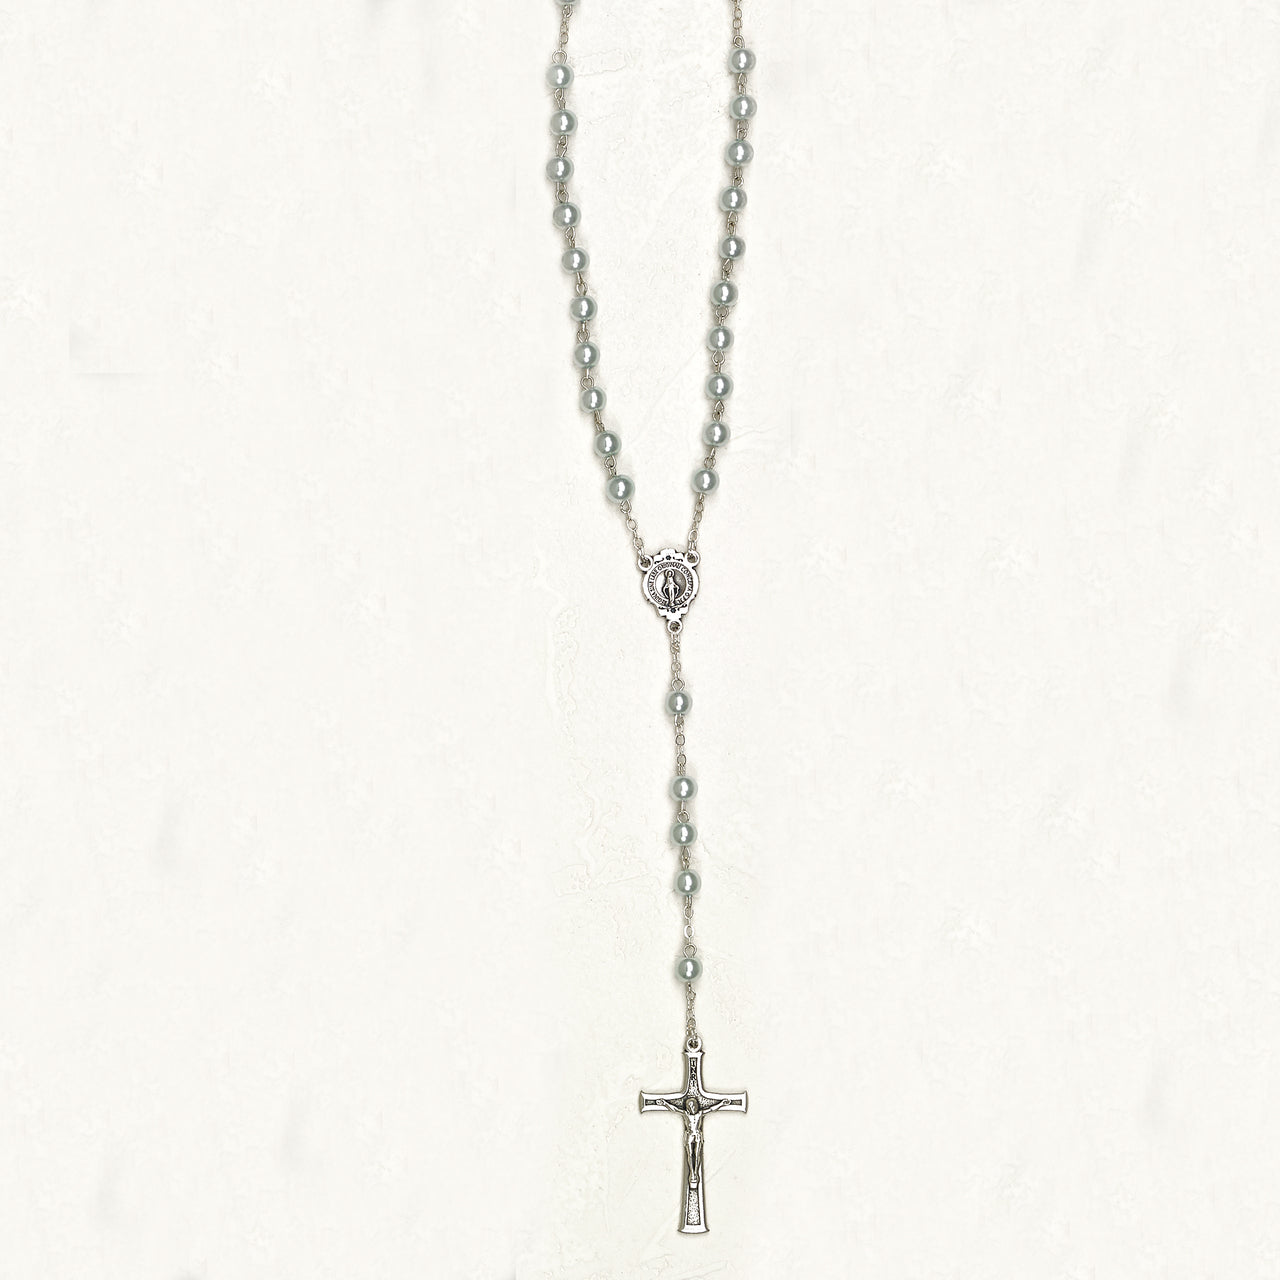 5mm Blue Imitation Pearl Bead Rosary